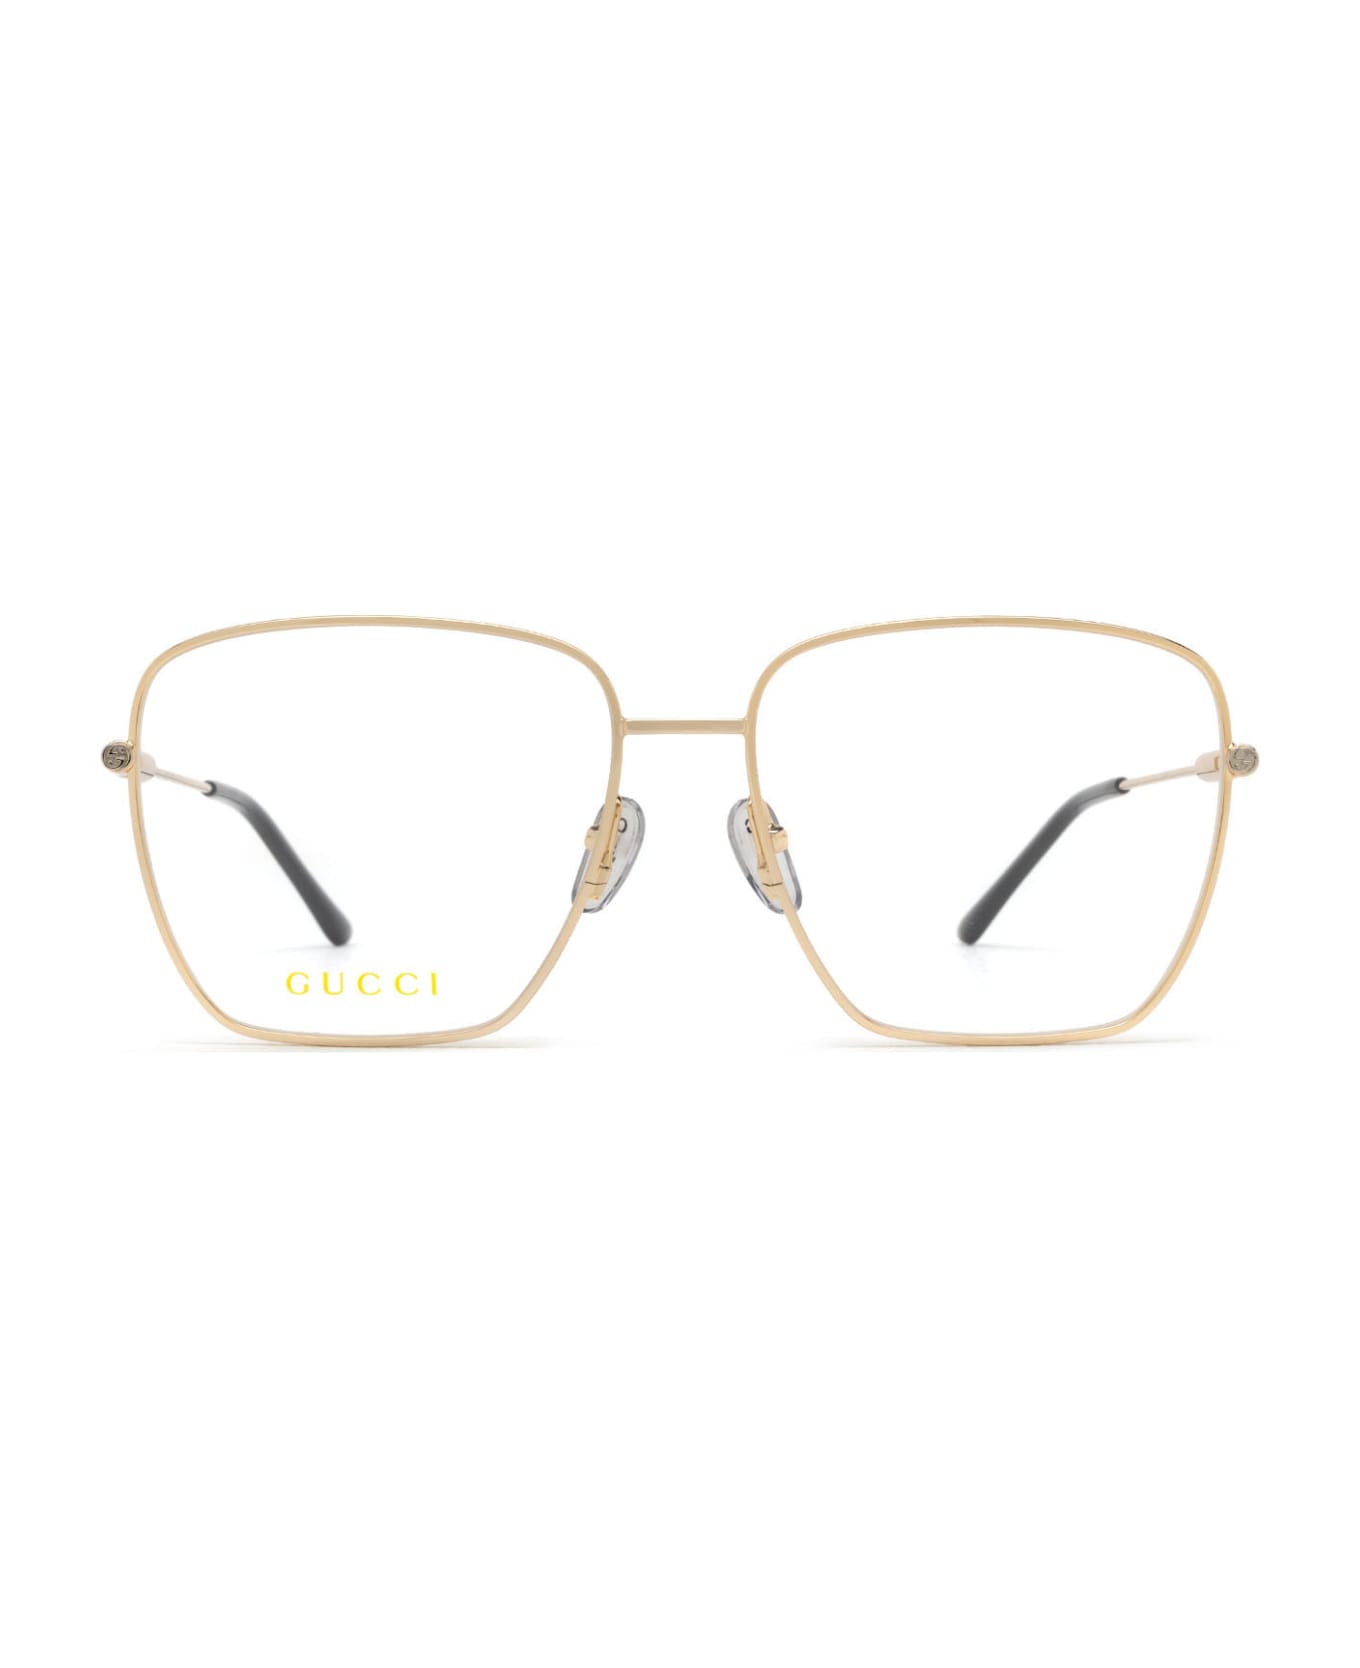 Gucci Eyewear Gg1414o Gold Glasses - Gold アイウェア